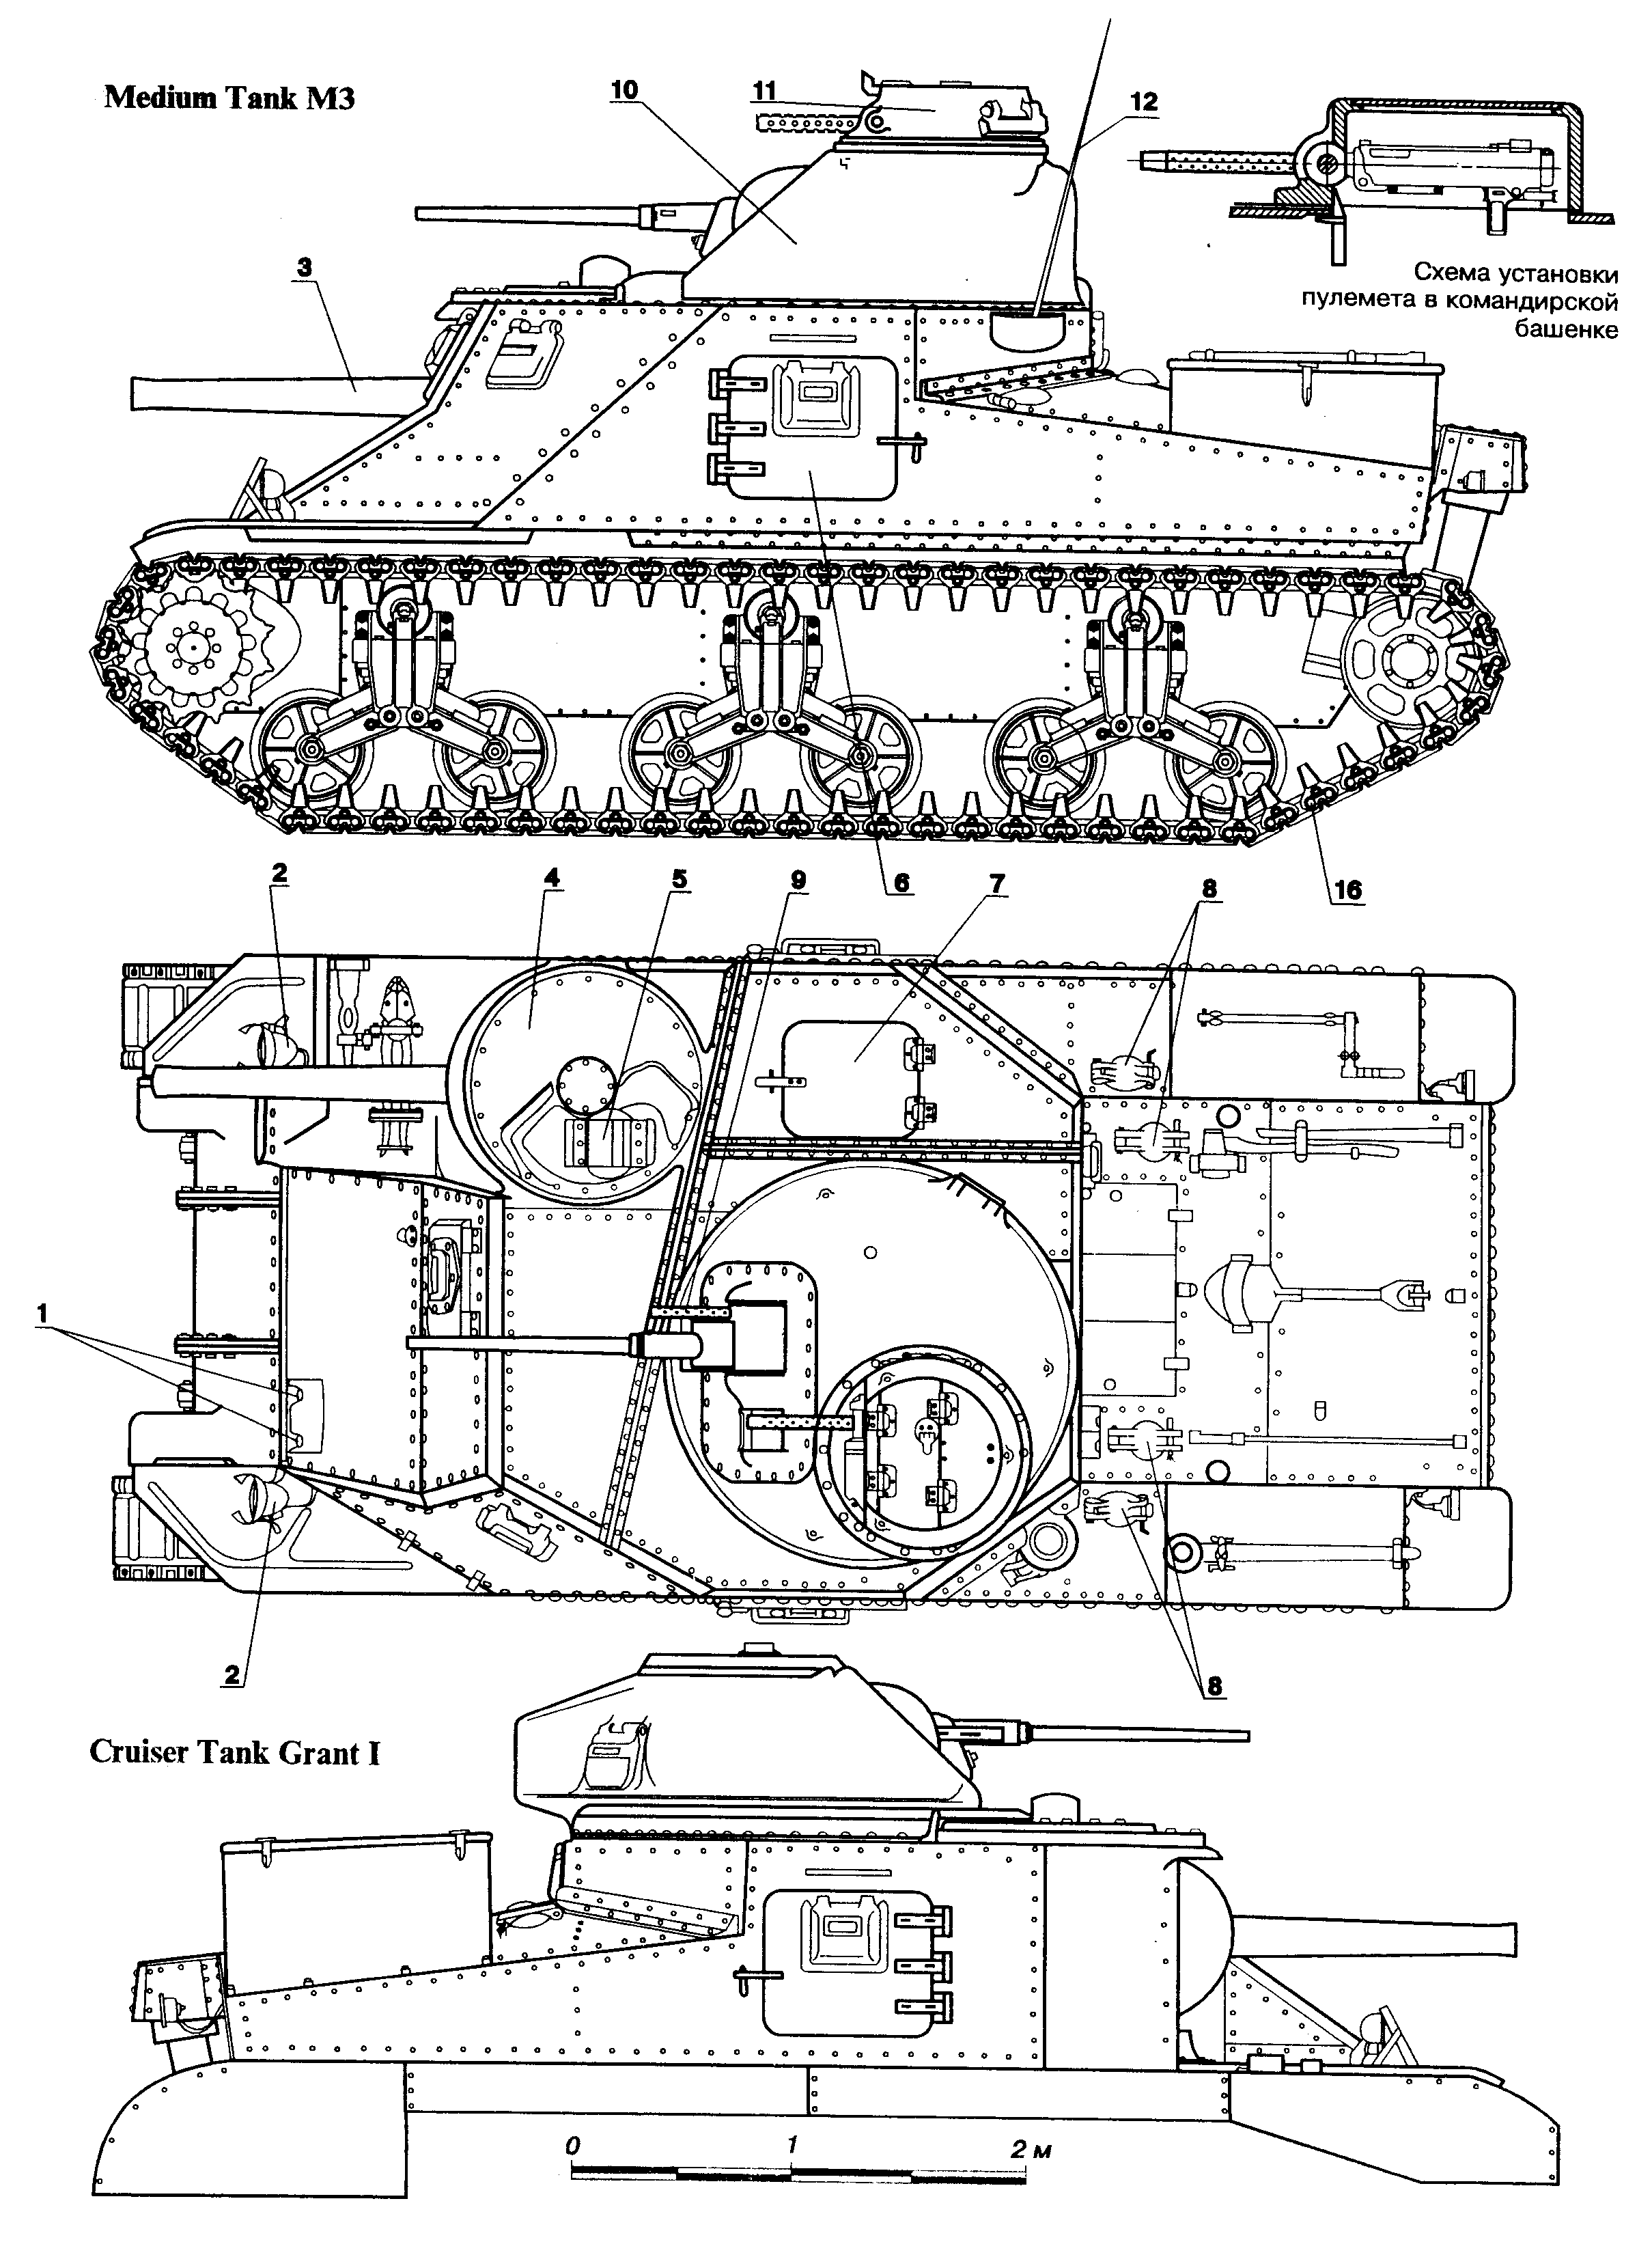 Чертеж M3 «Генерал Грант»